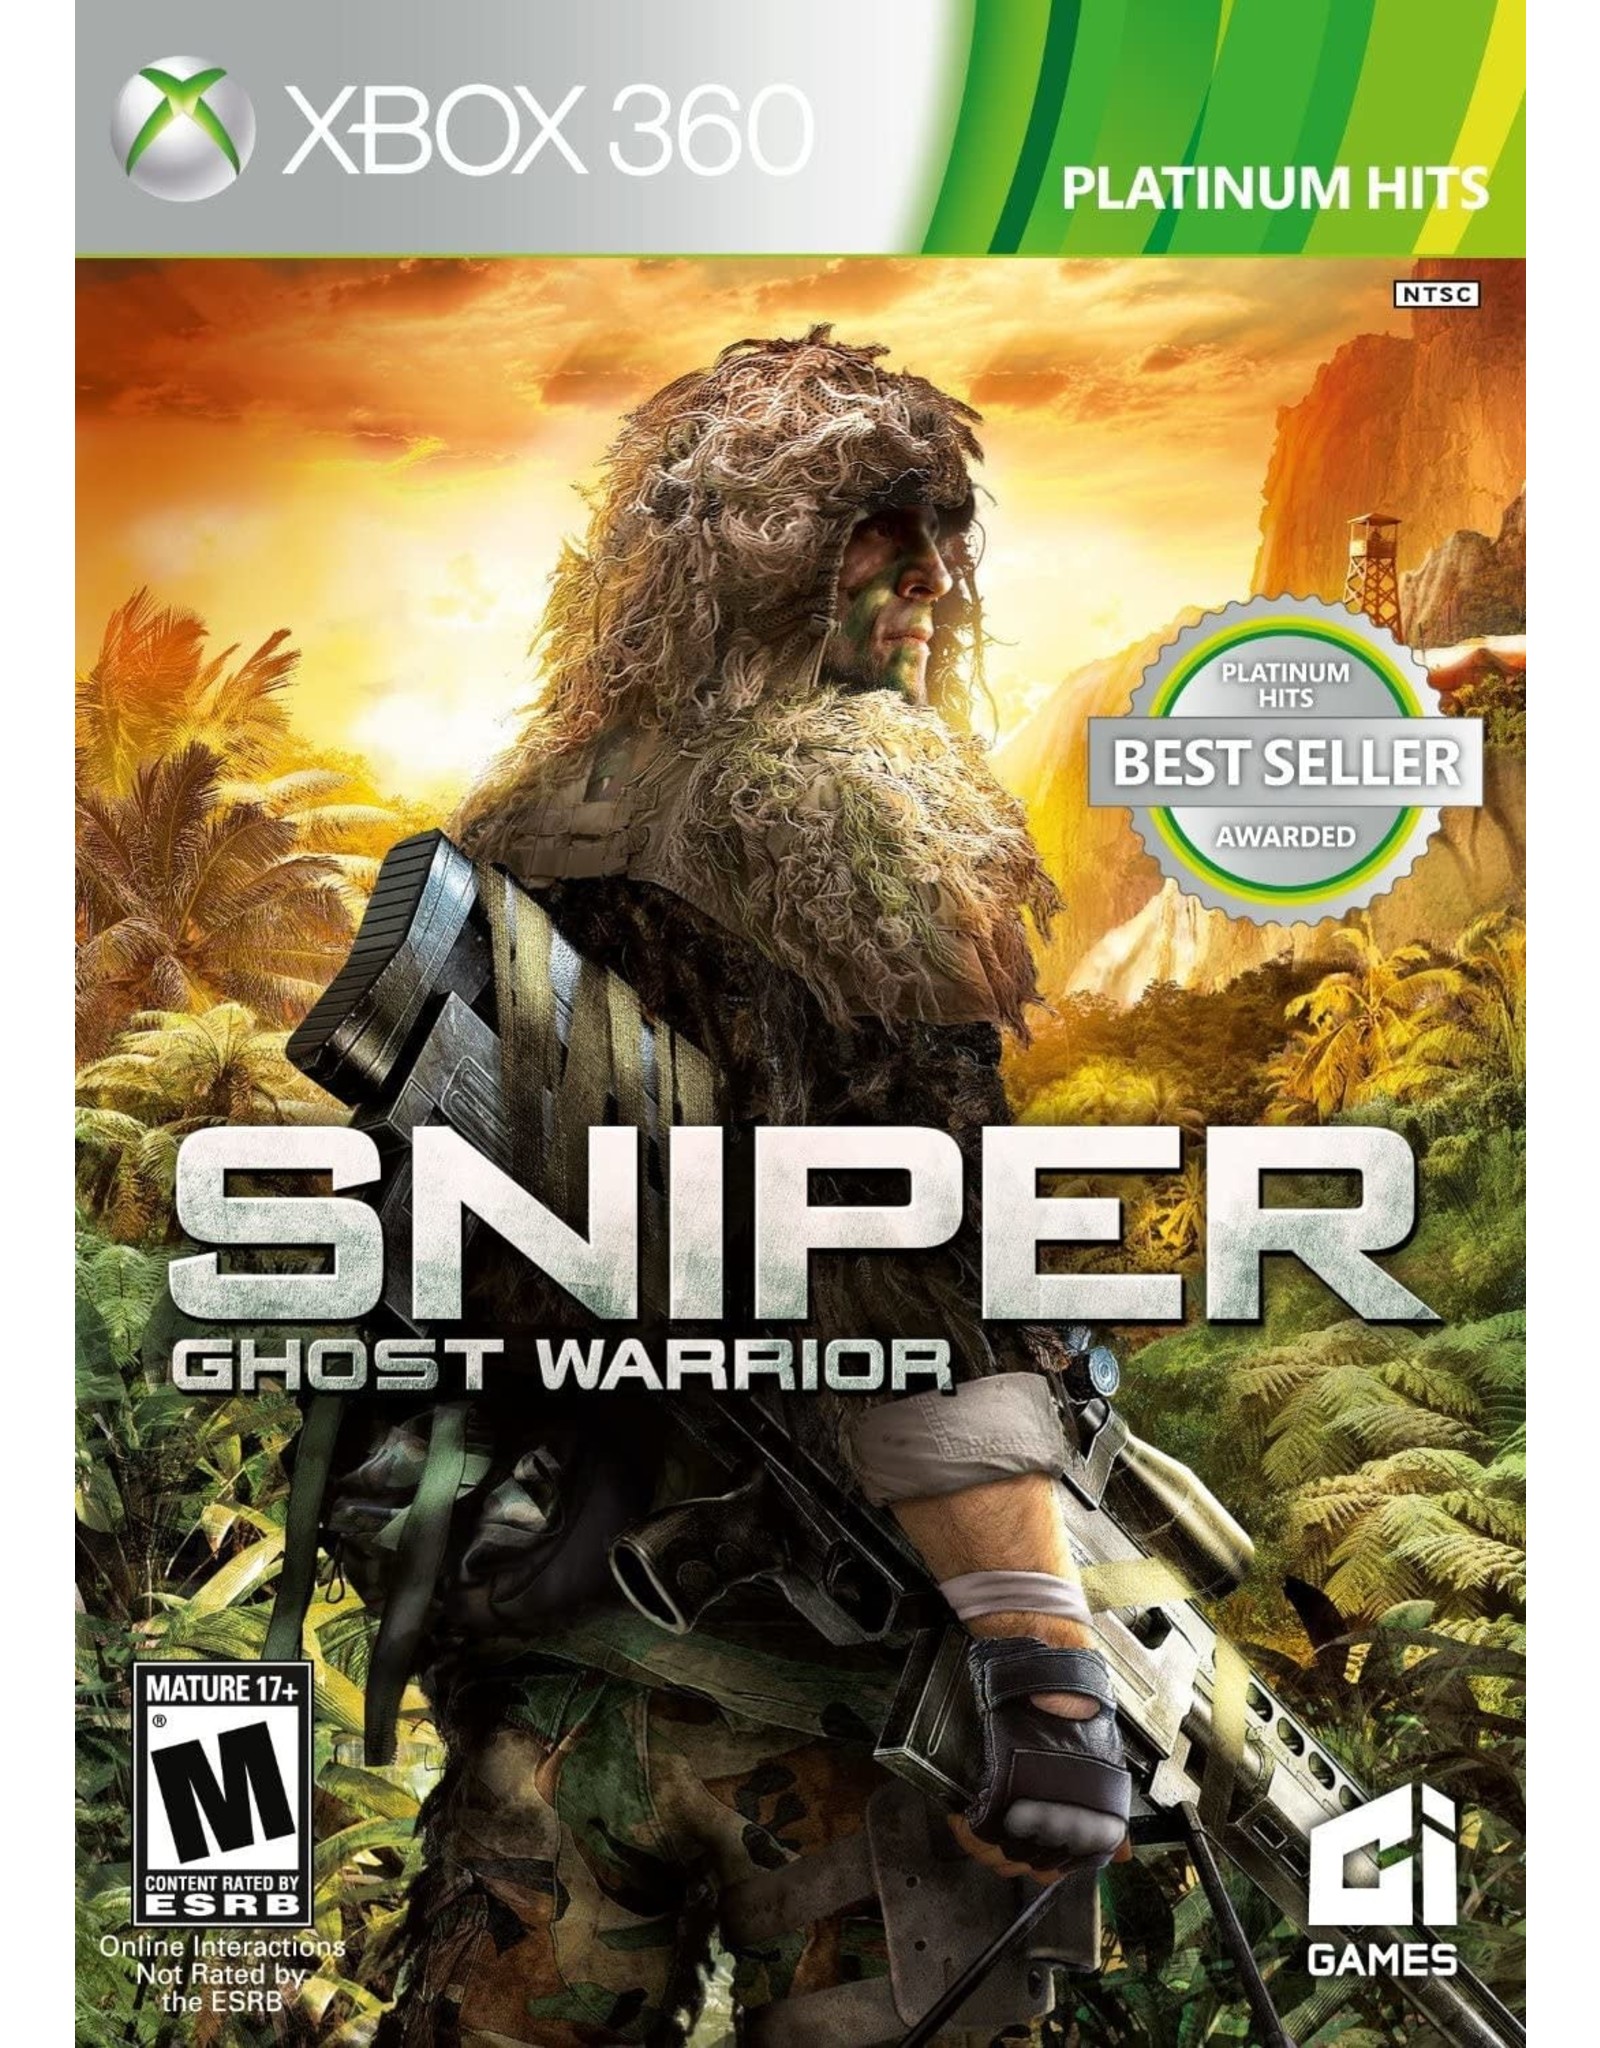 Xbox 360 Sniper Ghost Warrior (Platinum Hits, CiB)